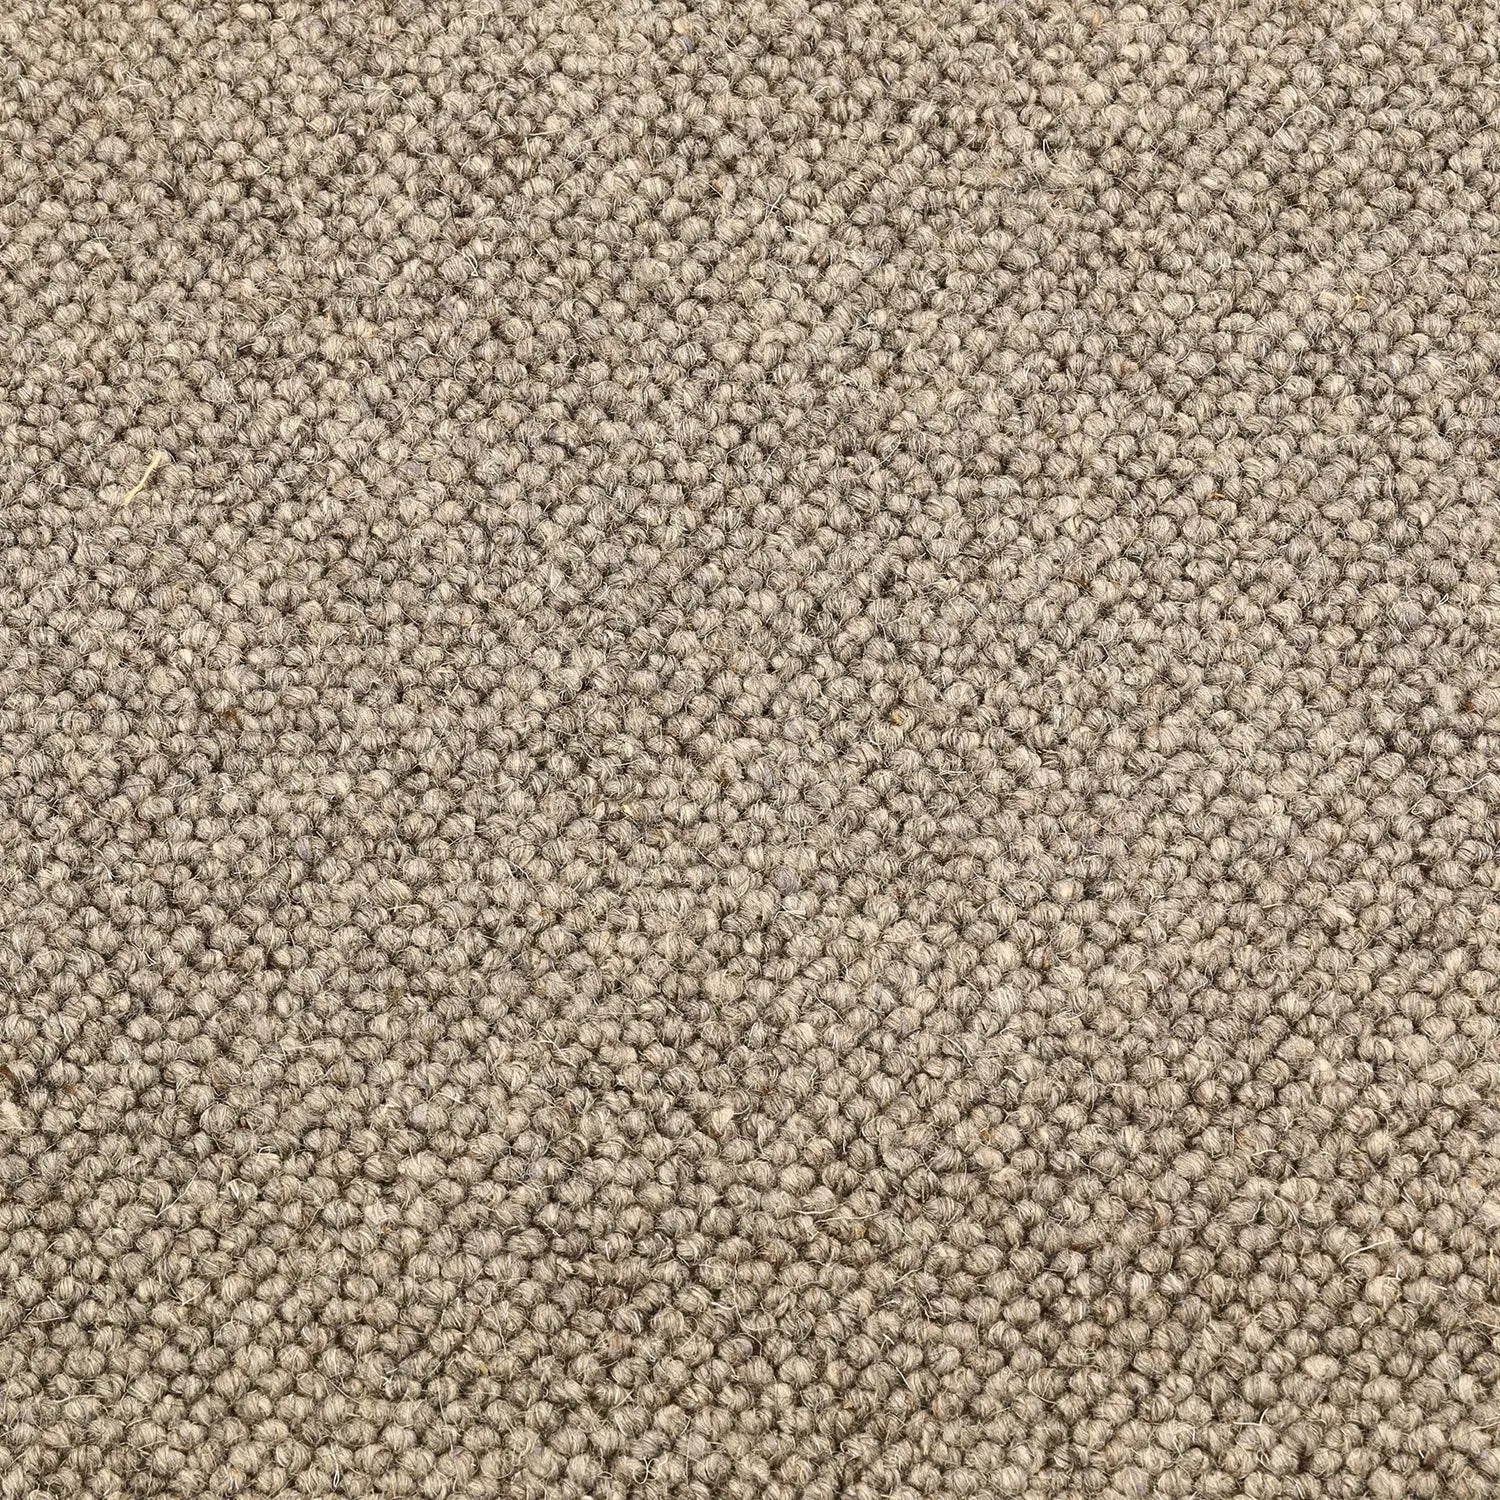 Venlo Wool Carpet - Carpet - Rugs a Million